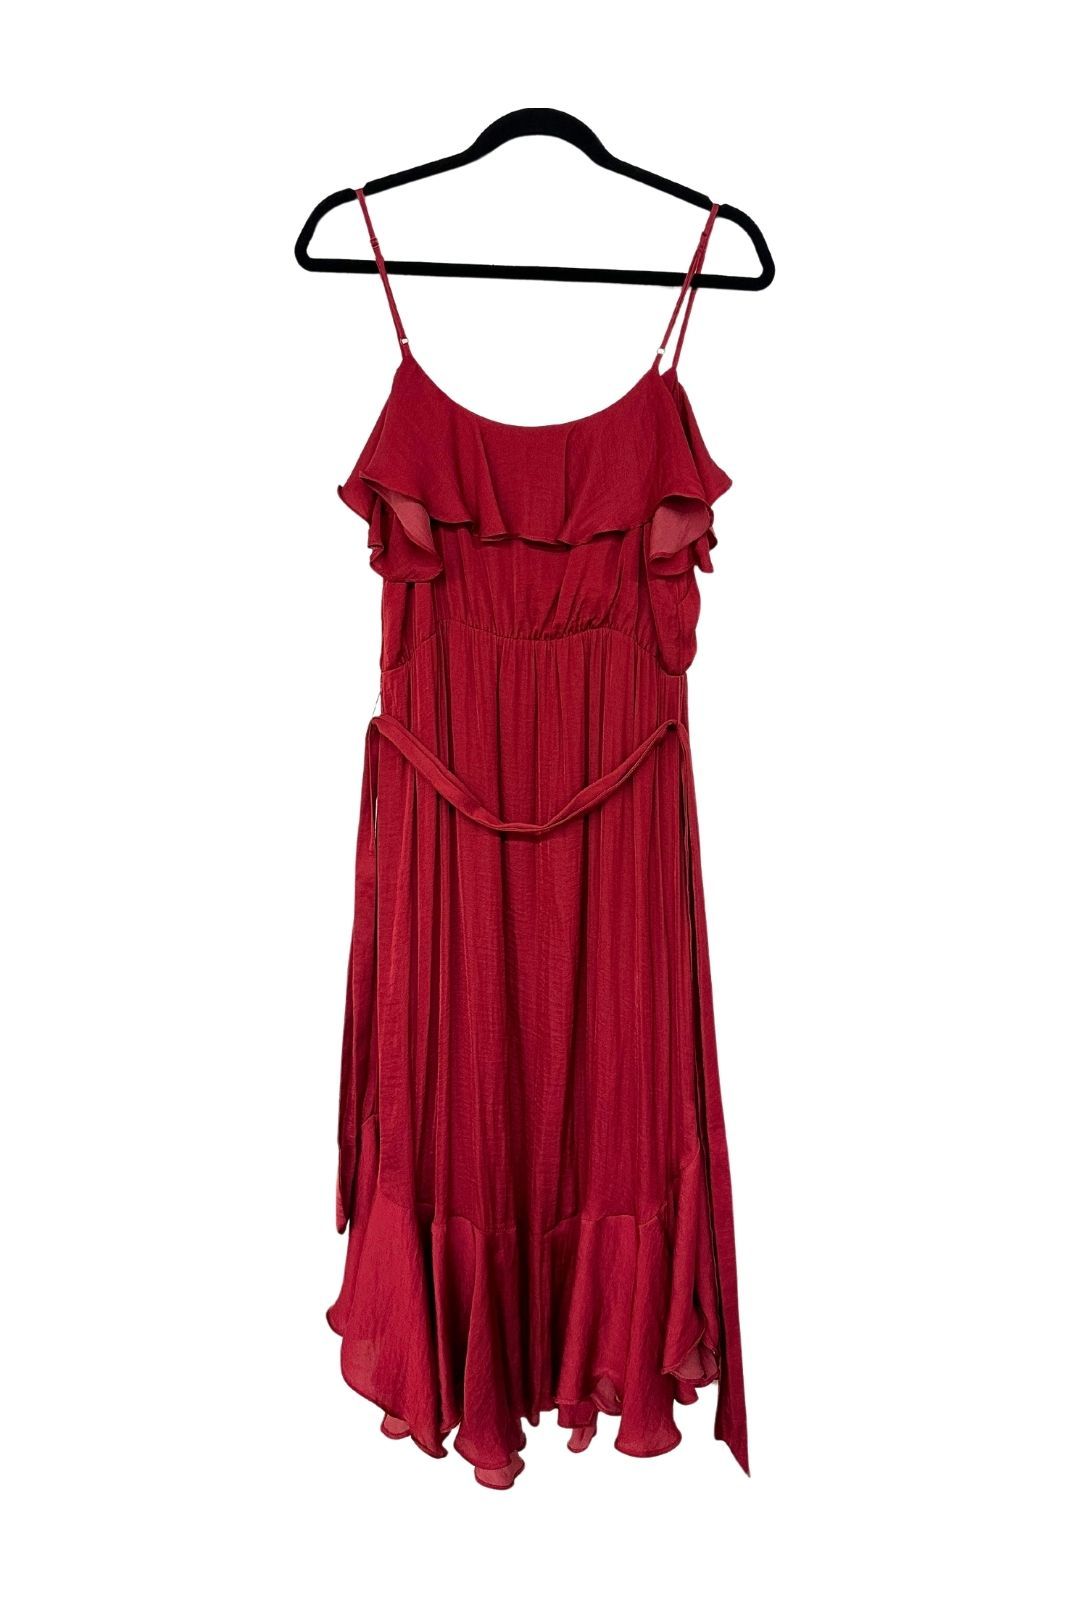 Flirty Red Dress - Skater Dress - Fit and Flare Dress - $39.00 - Lulus